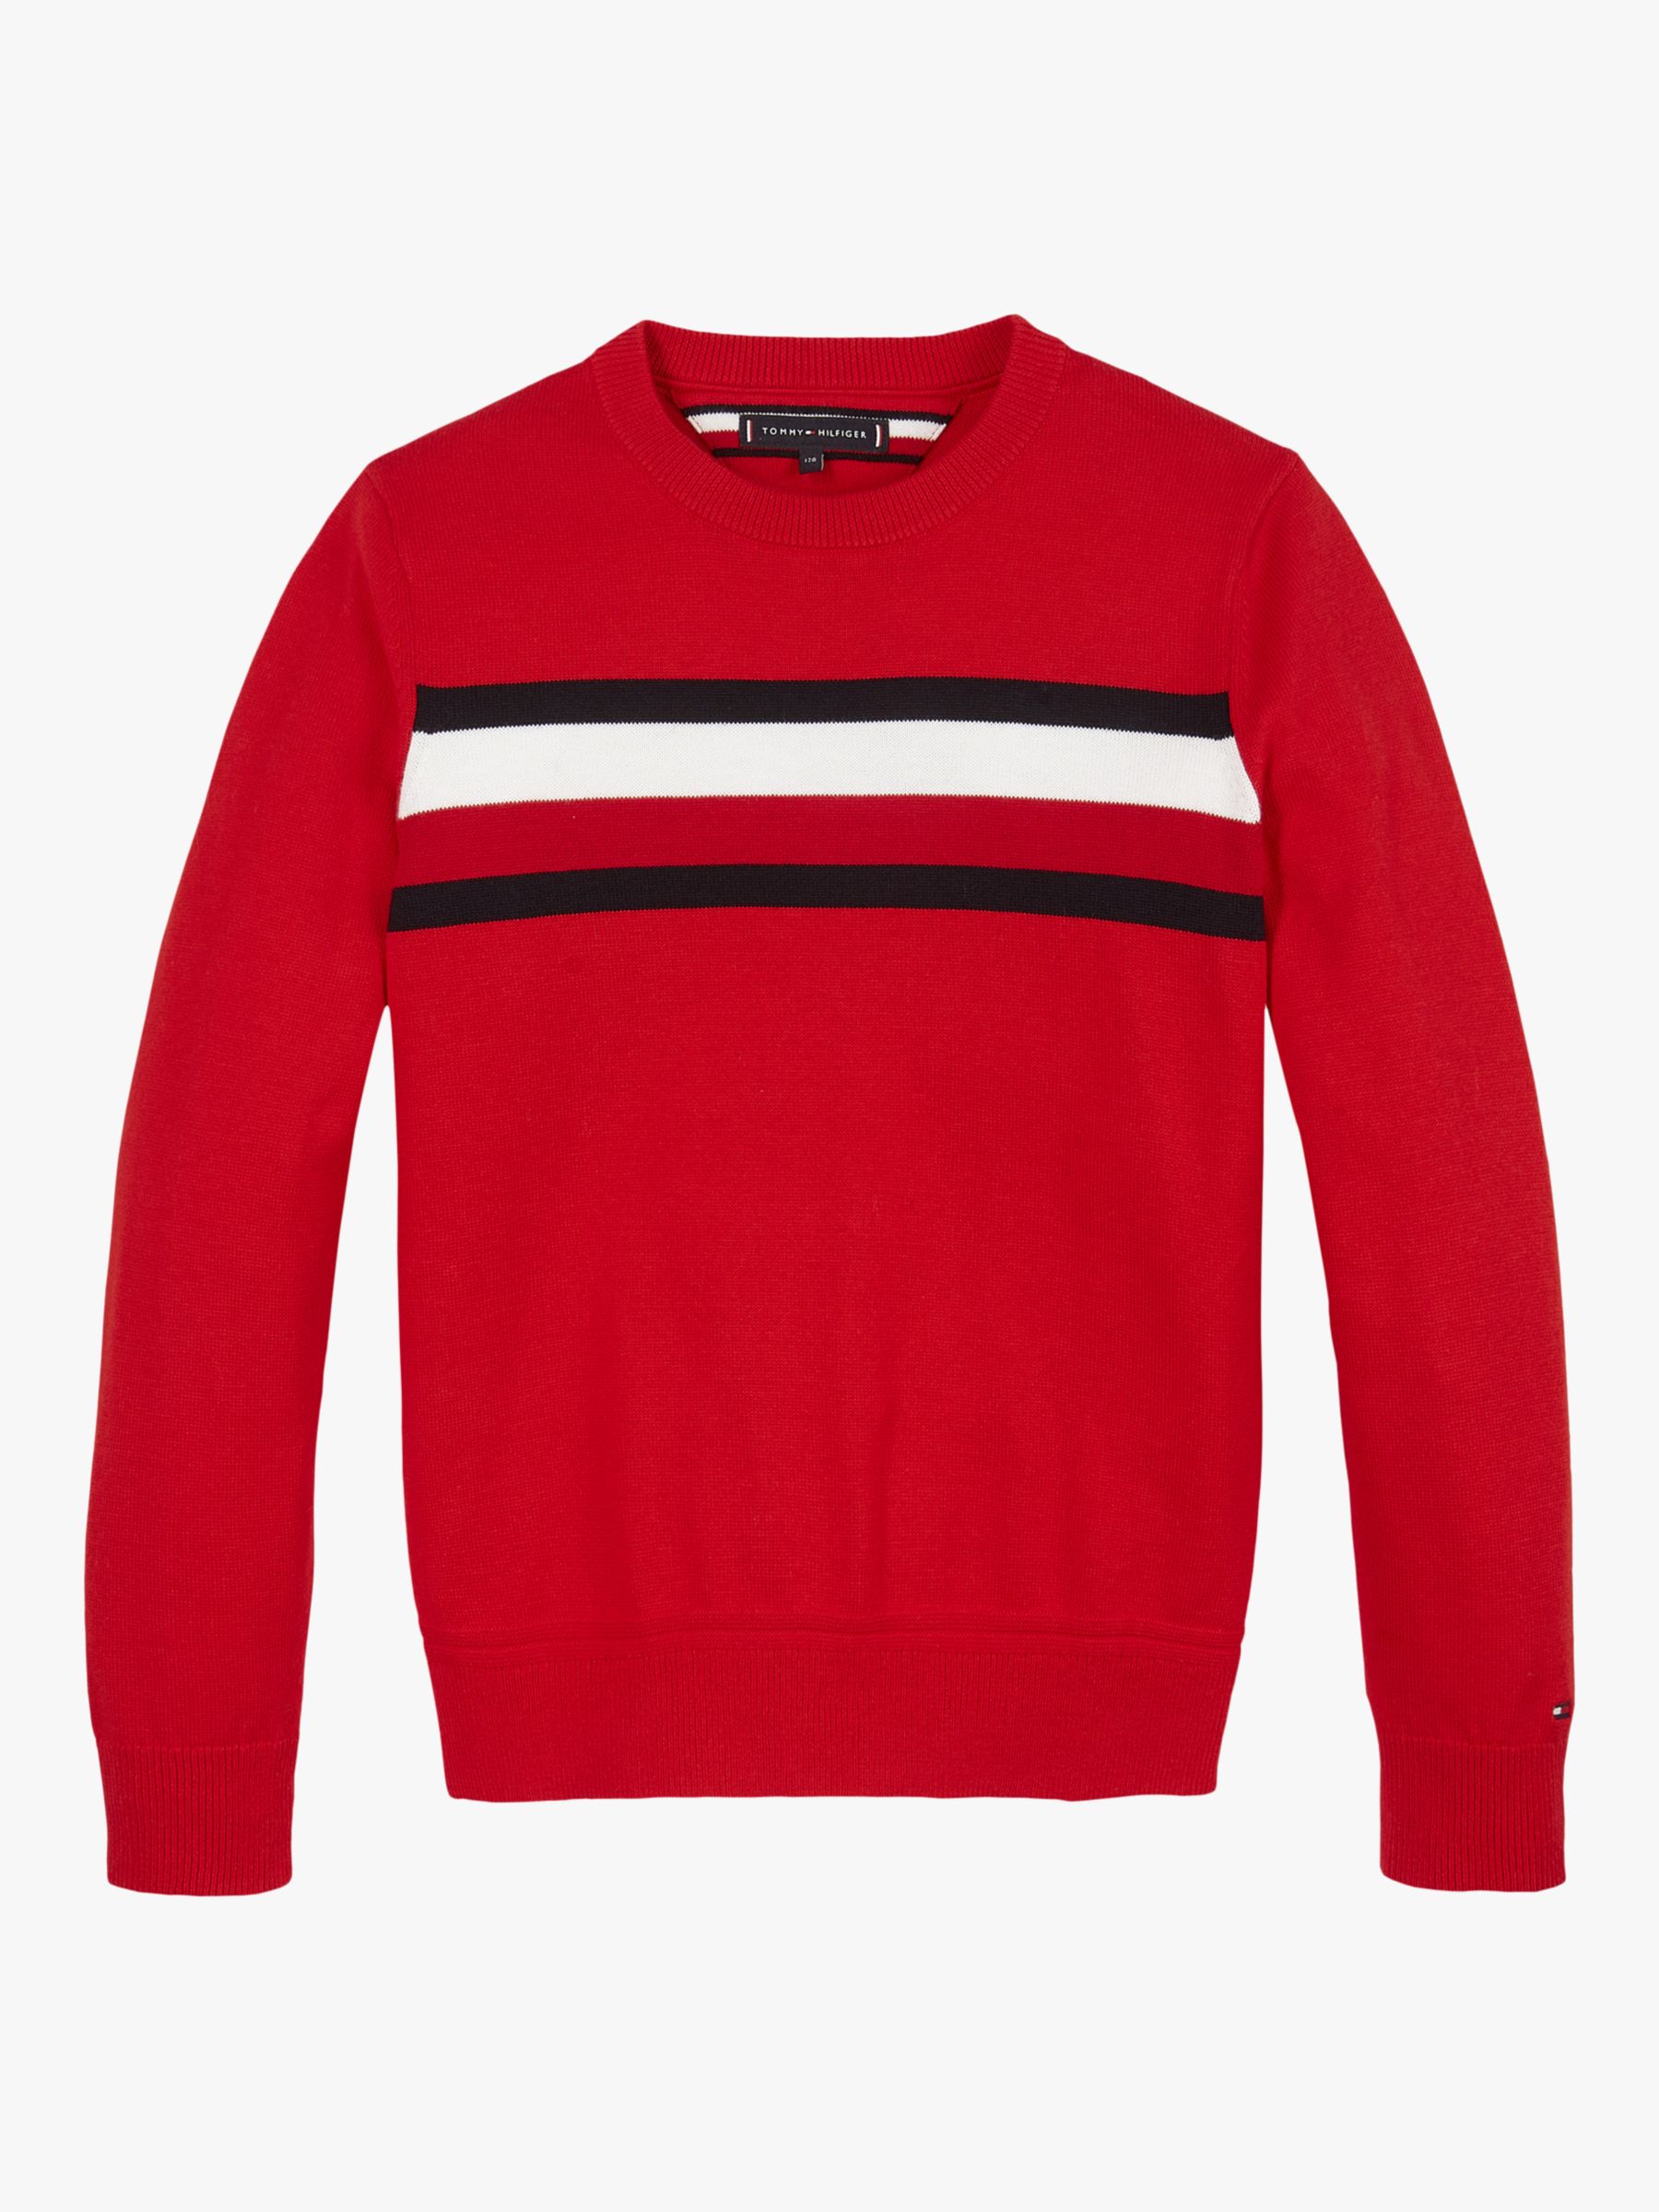 Boys John Lewis black sweatshirt cotton mix jumper chest 66cm/26ins brand new